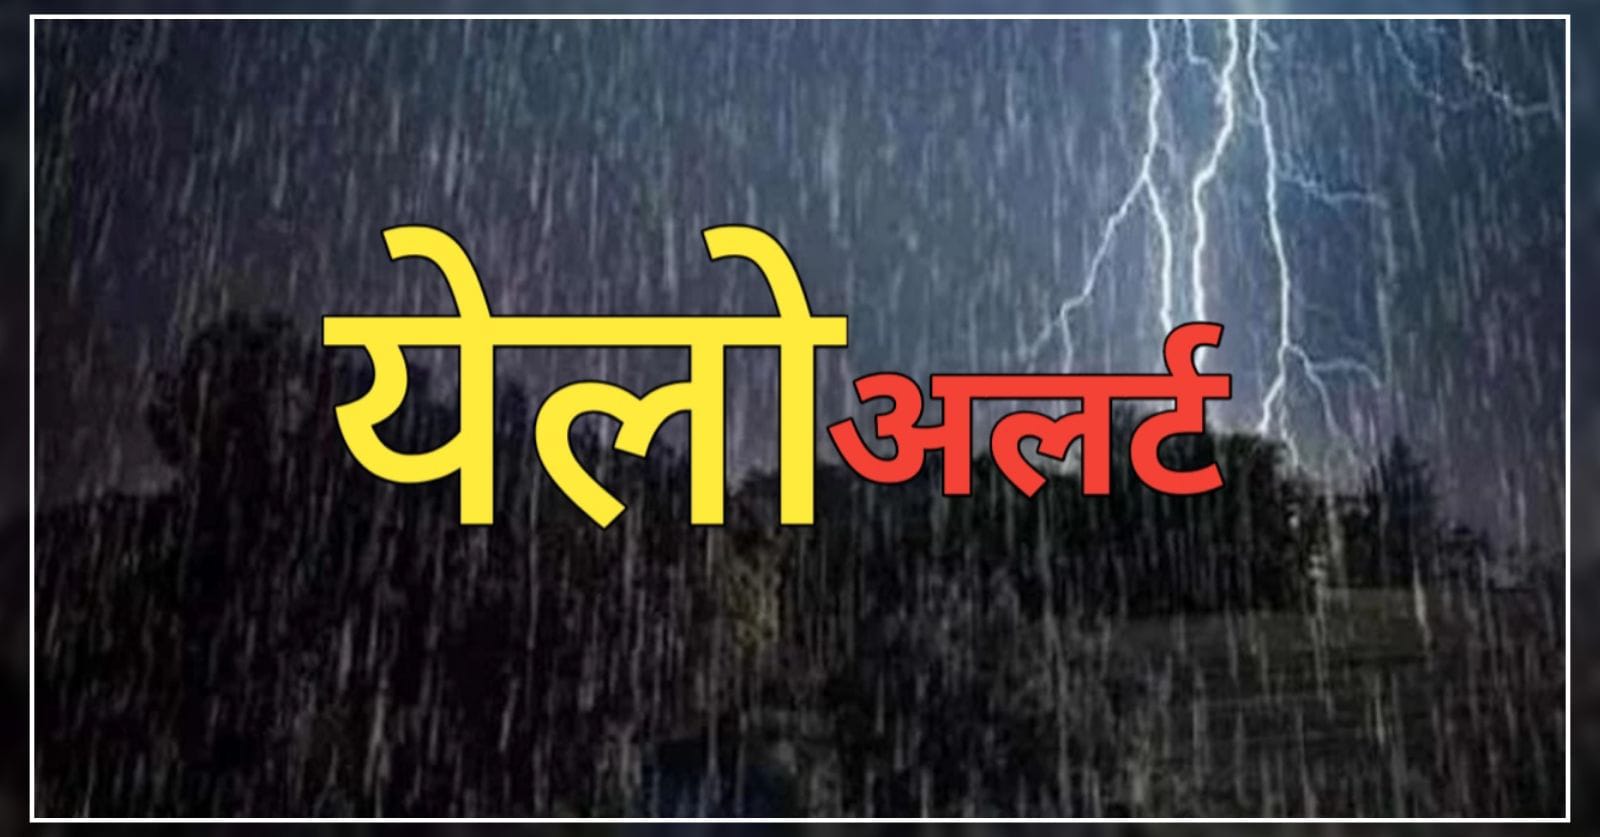 Meteorological Department issued yellow alert, there will be rain with thunder in these districts मौसम विभाग ने जारी किया येलो अलर्ट, इन जिलों में गरज चमक के साथ होगी बारिश - Ghamasan